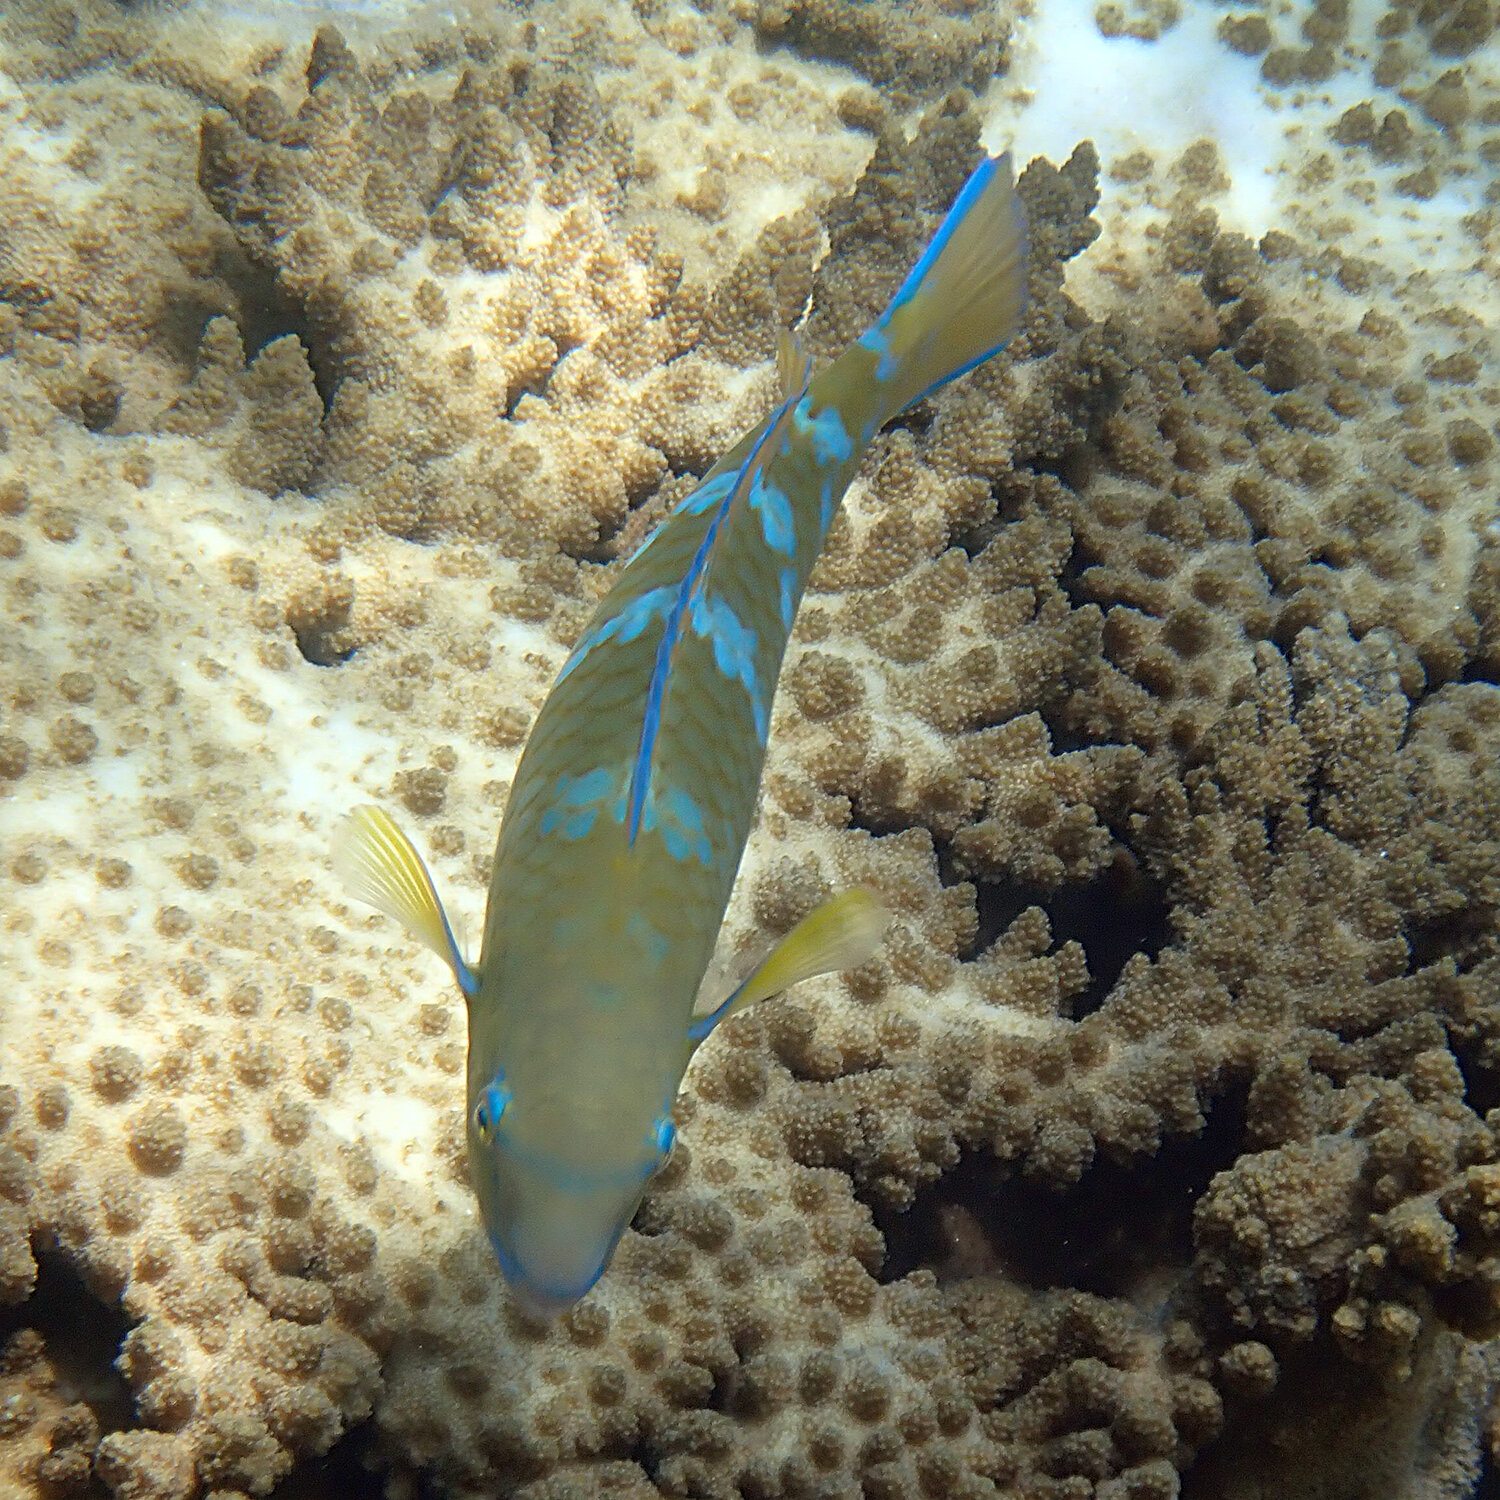 Bluebarred parrotfish - Scarus ghobban 